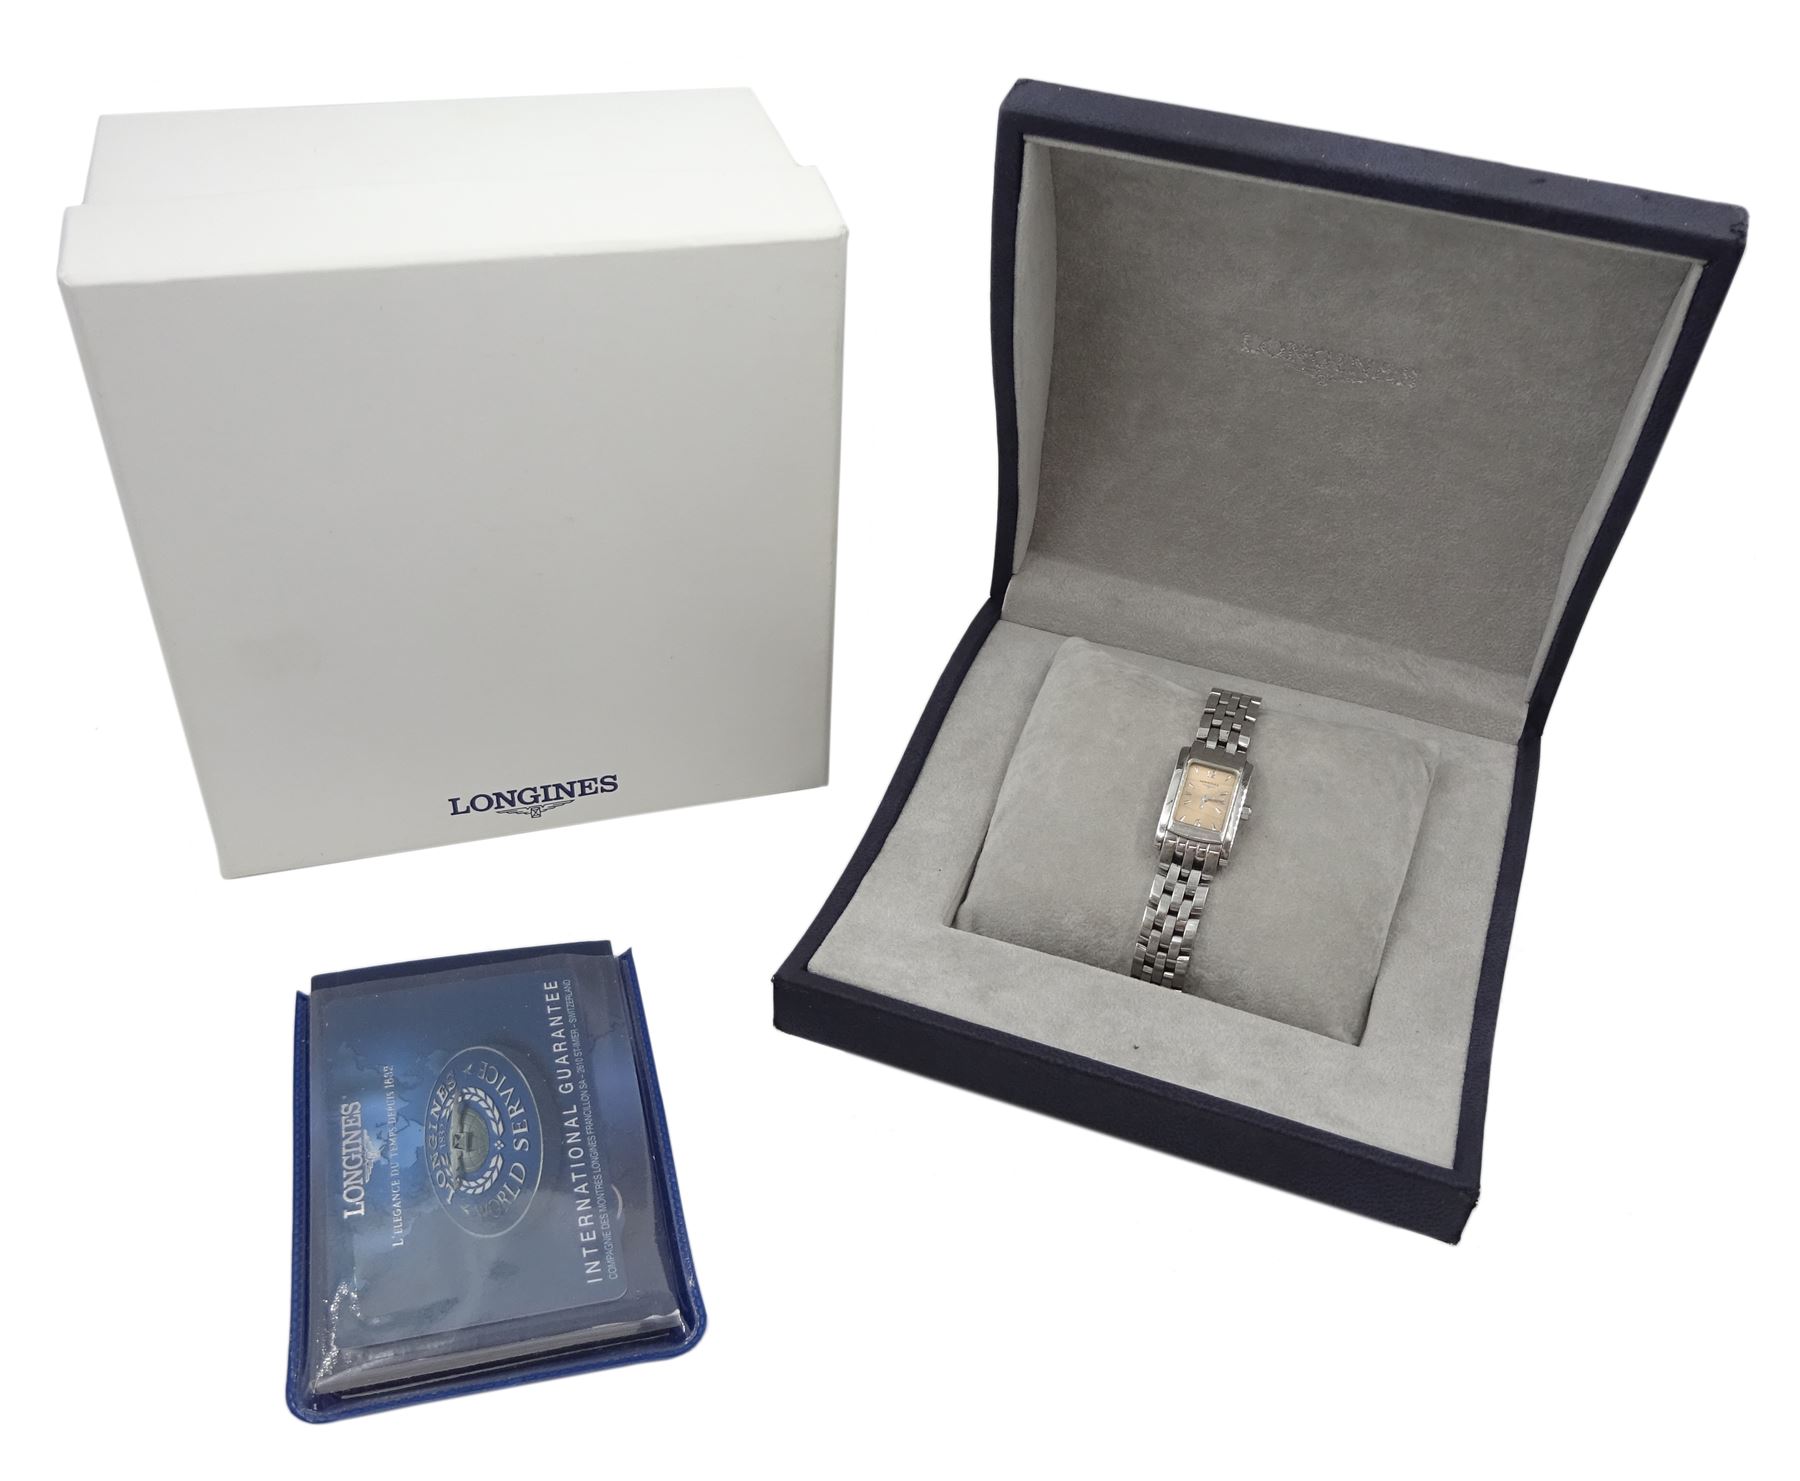 Longines DolceVita ladies stainless steel quartz wristwatch - Image 2 of 4